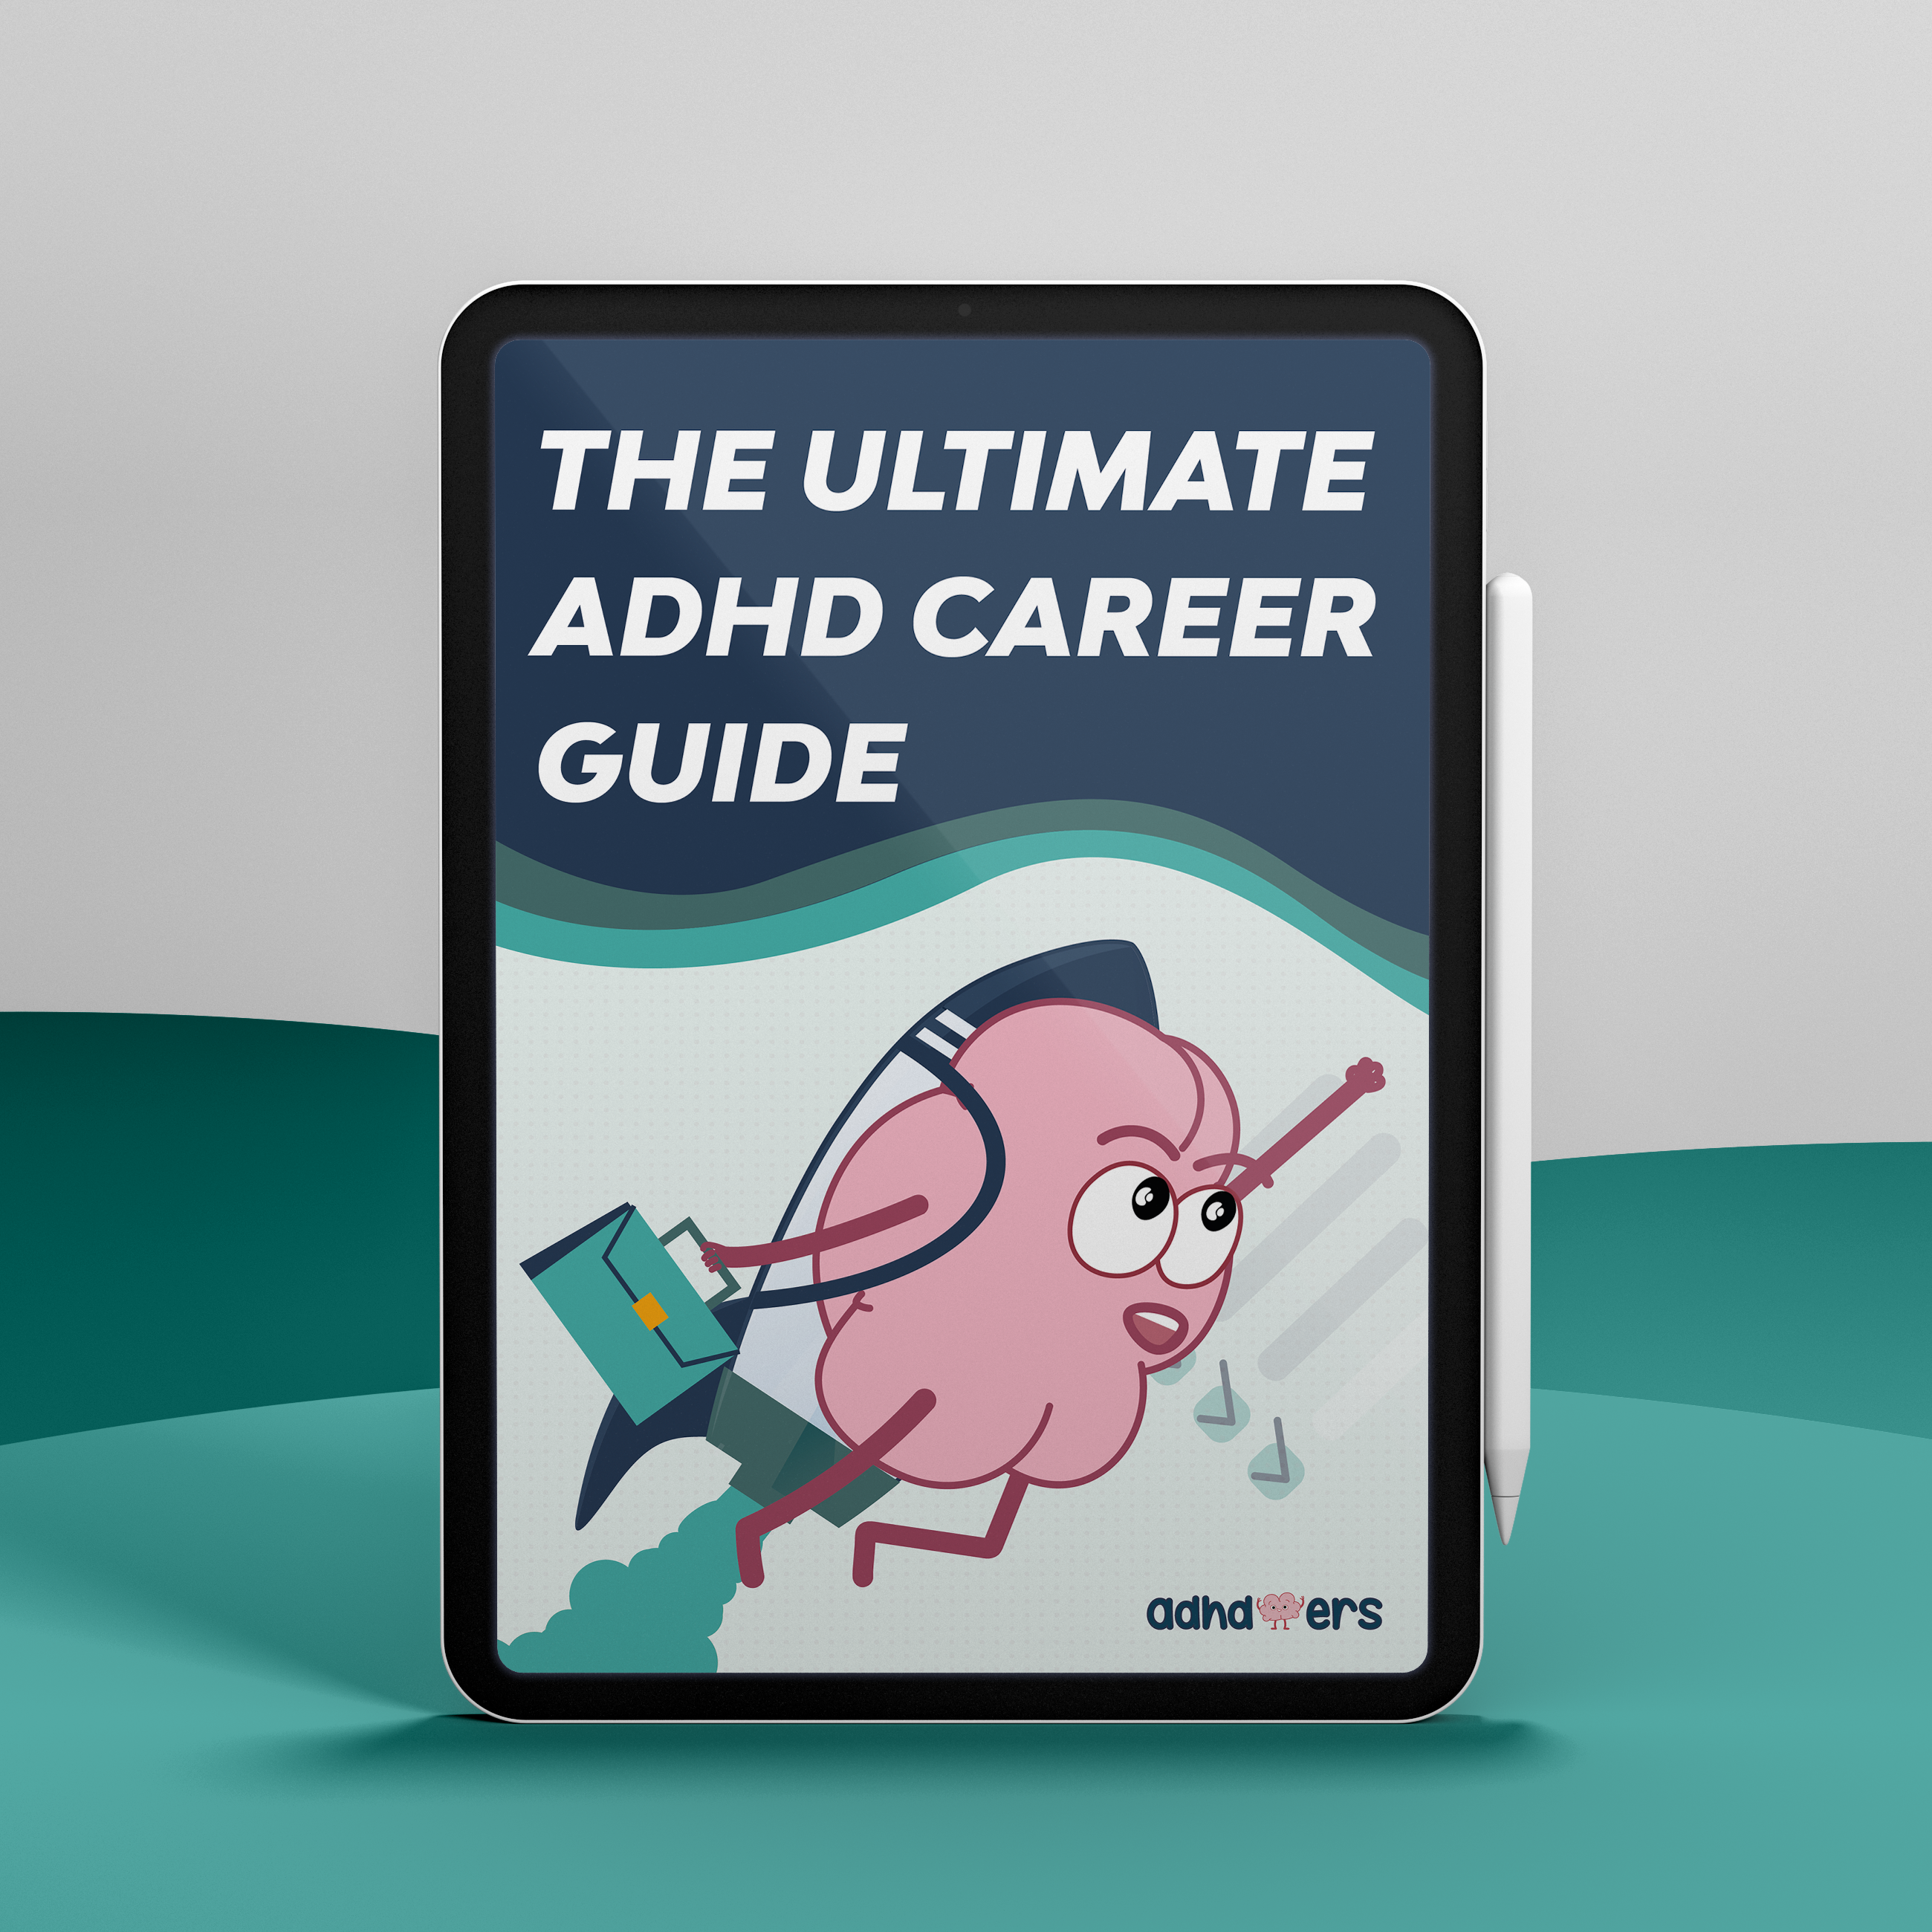 The Ultimate ADHD Career Guide